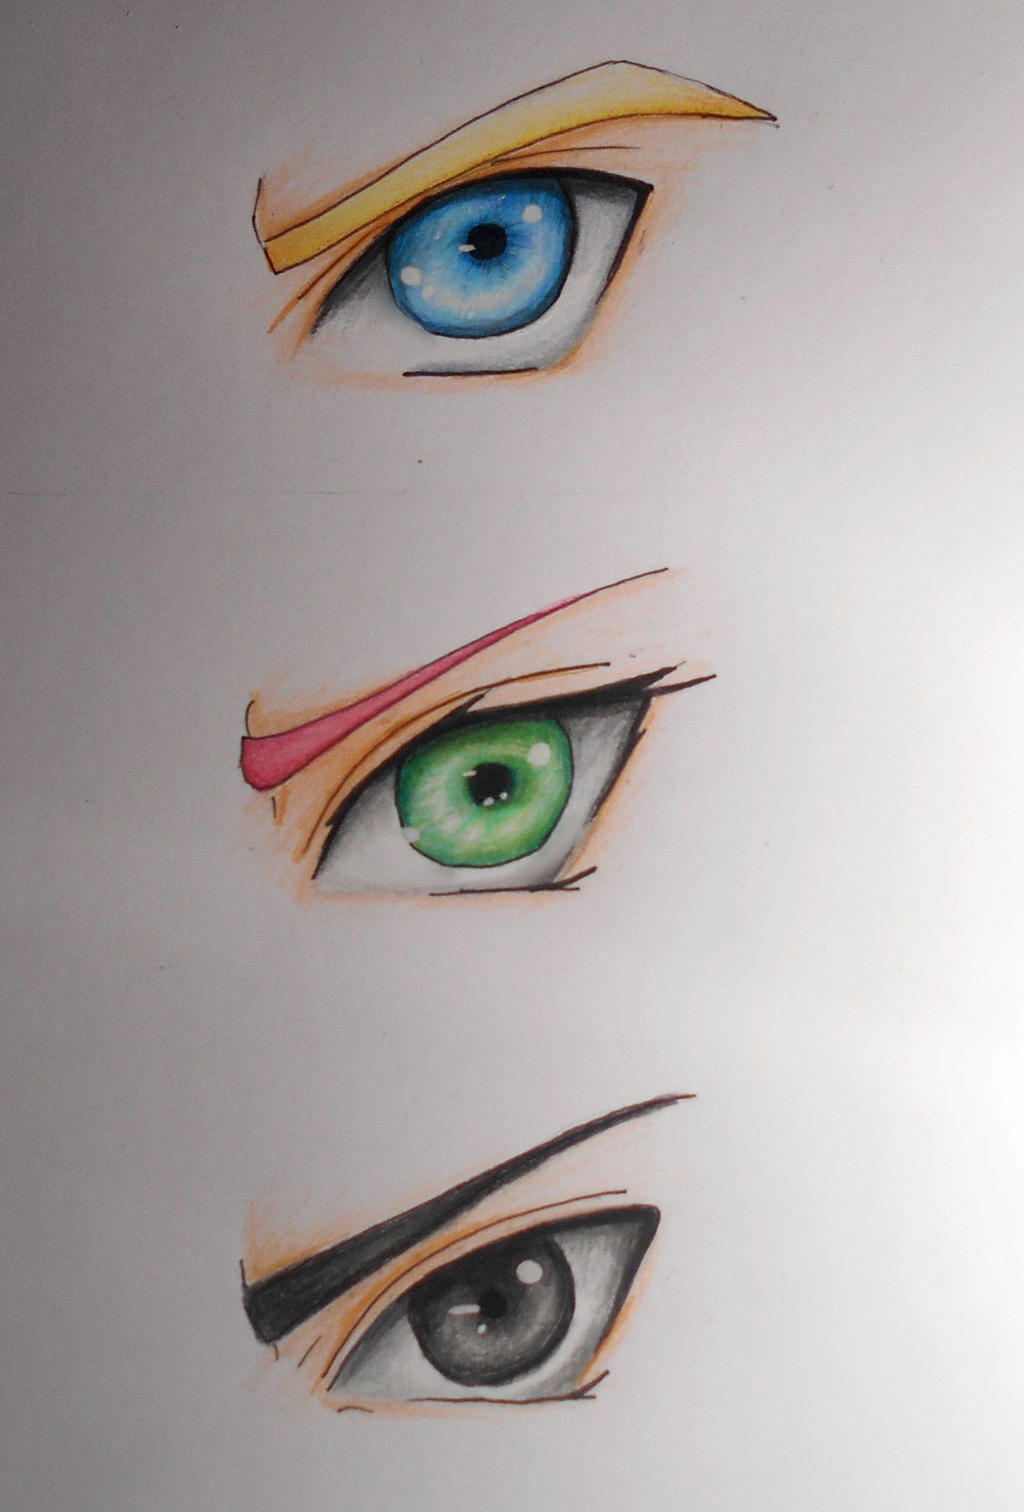 Naruto-eyes by UchihaAkanee on DeviantArt